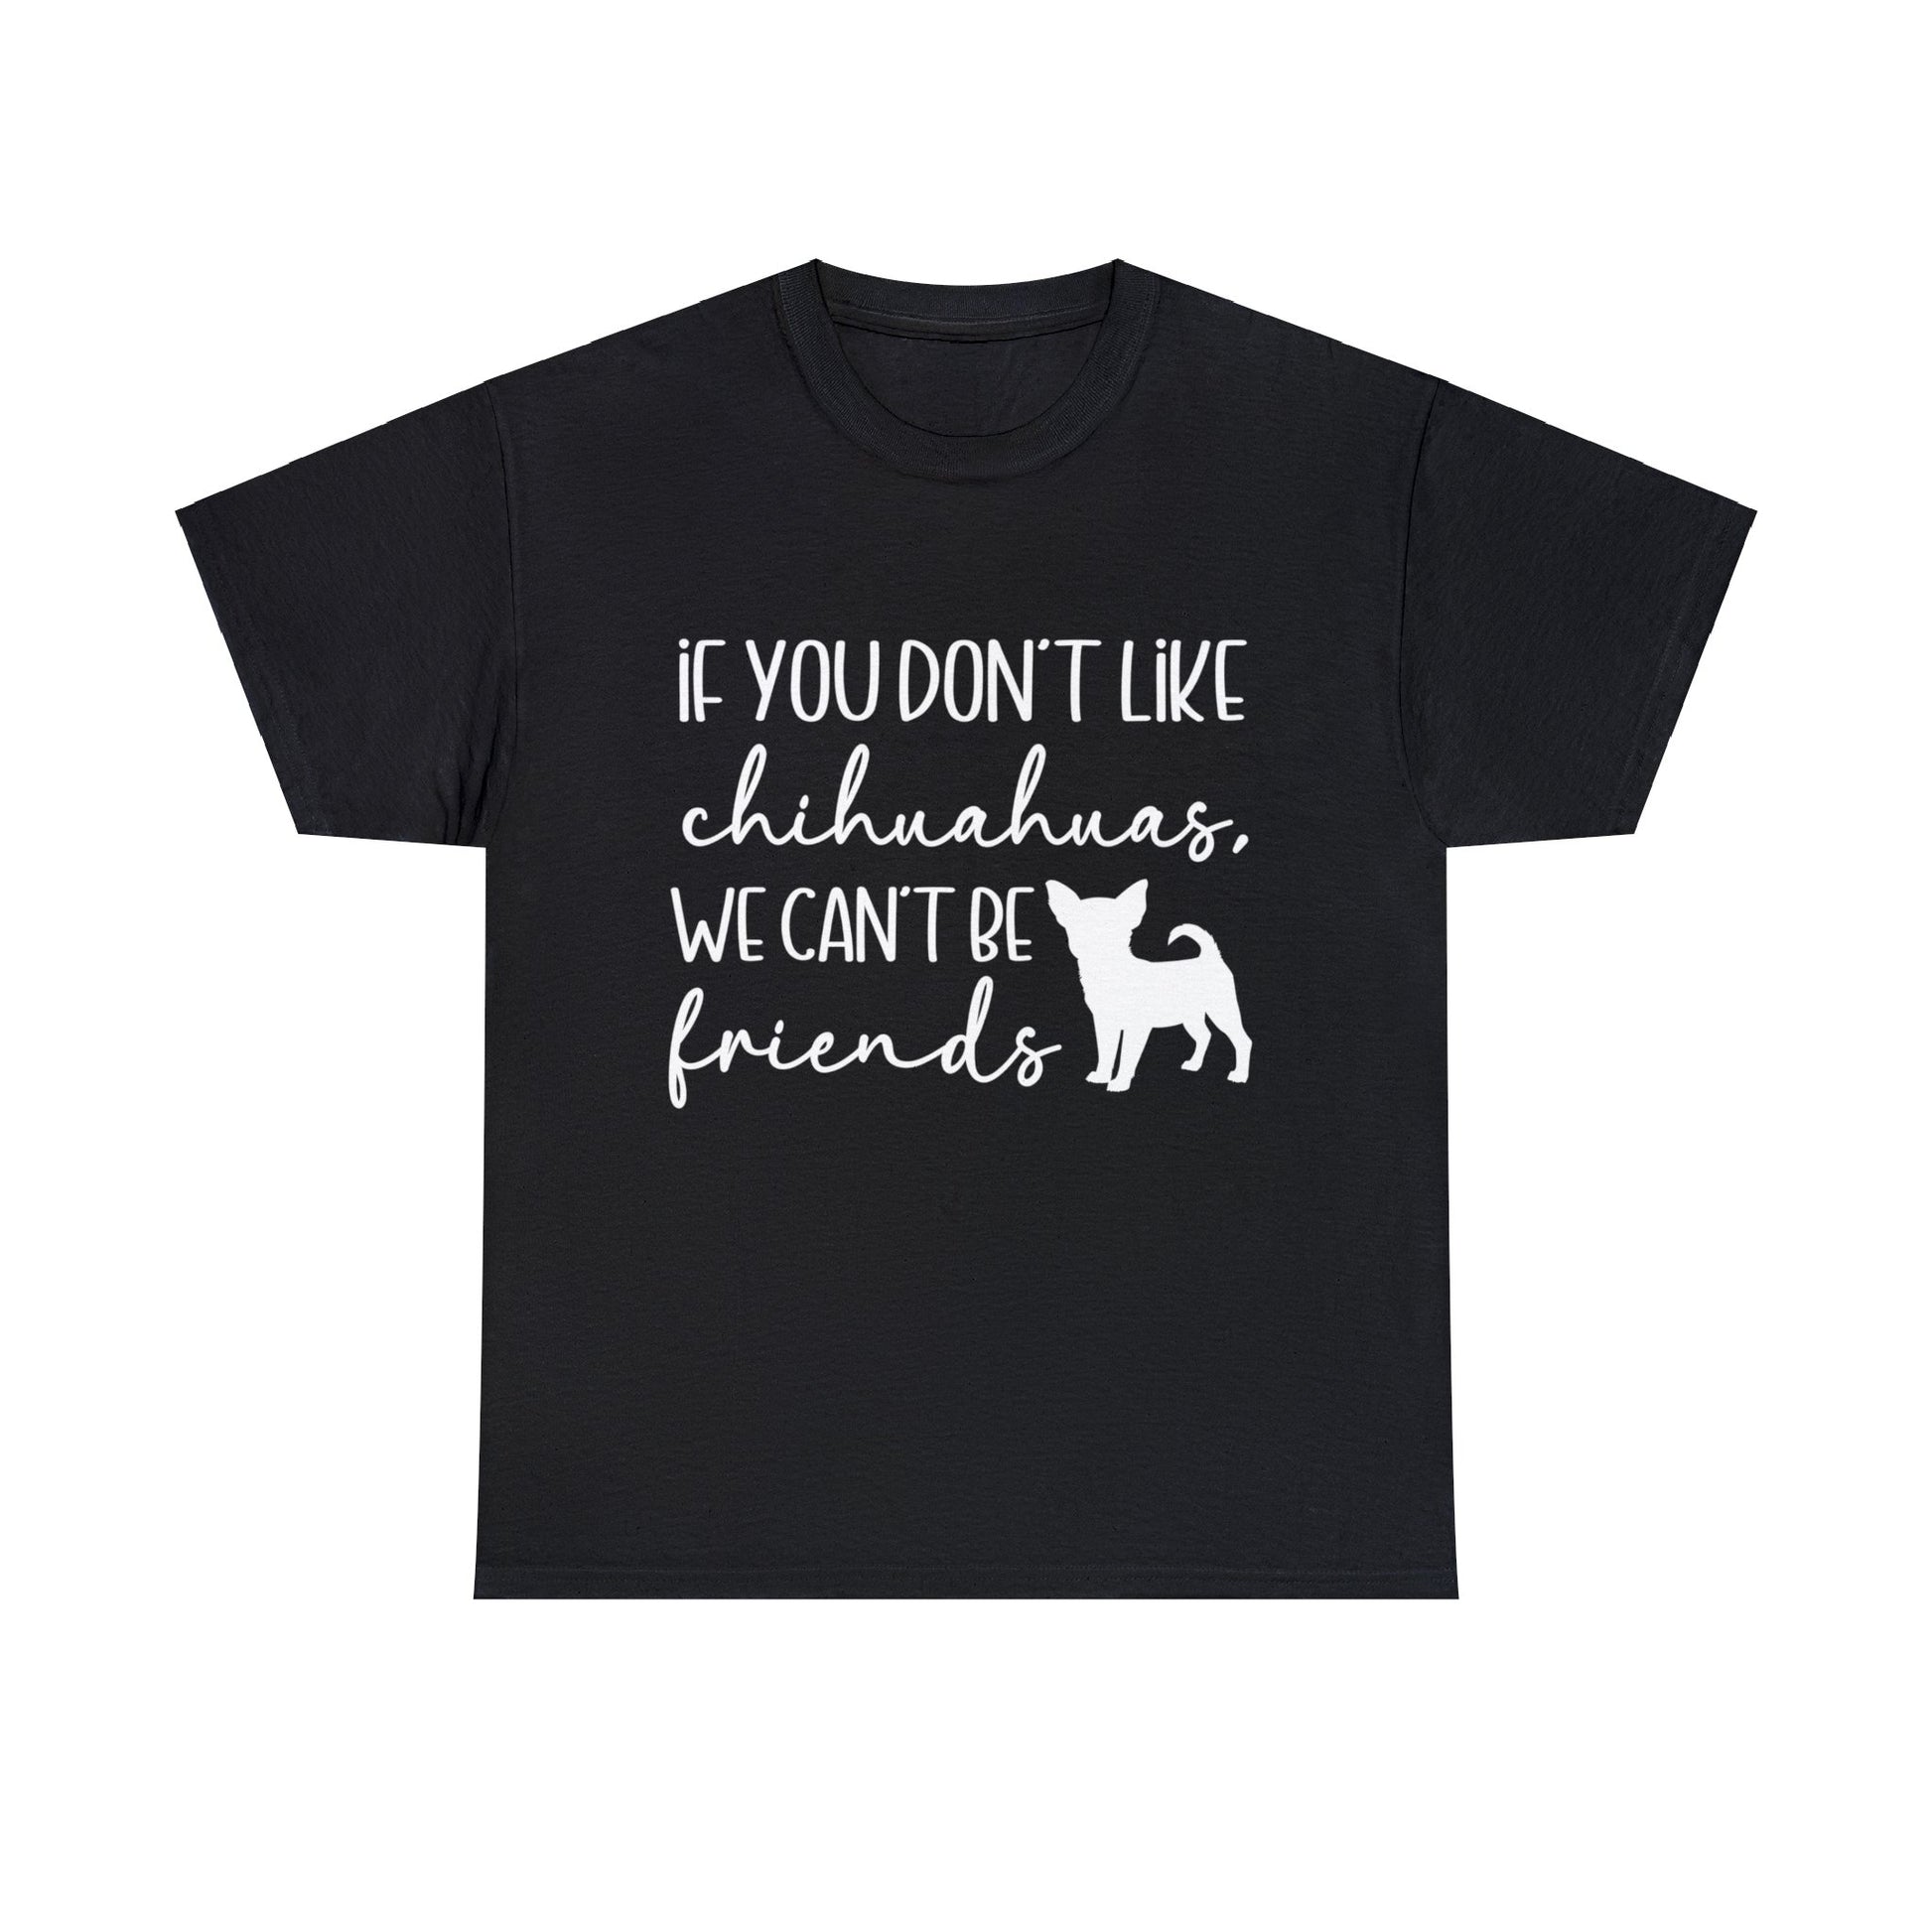 Funny dog t-shirts